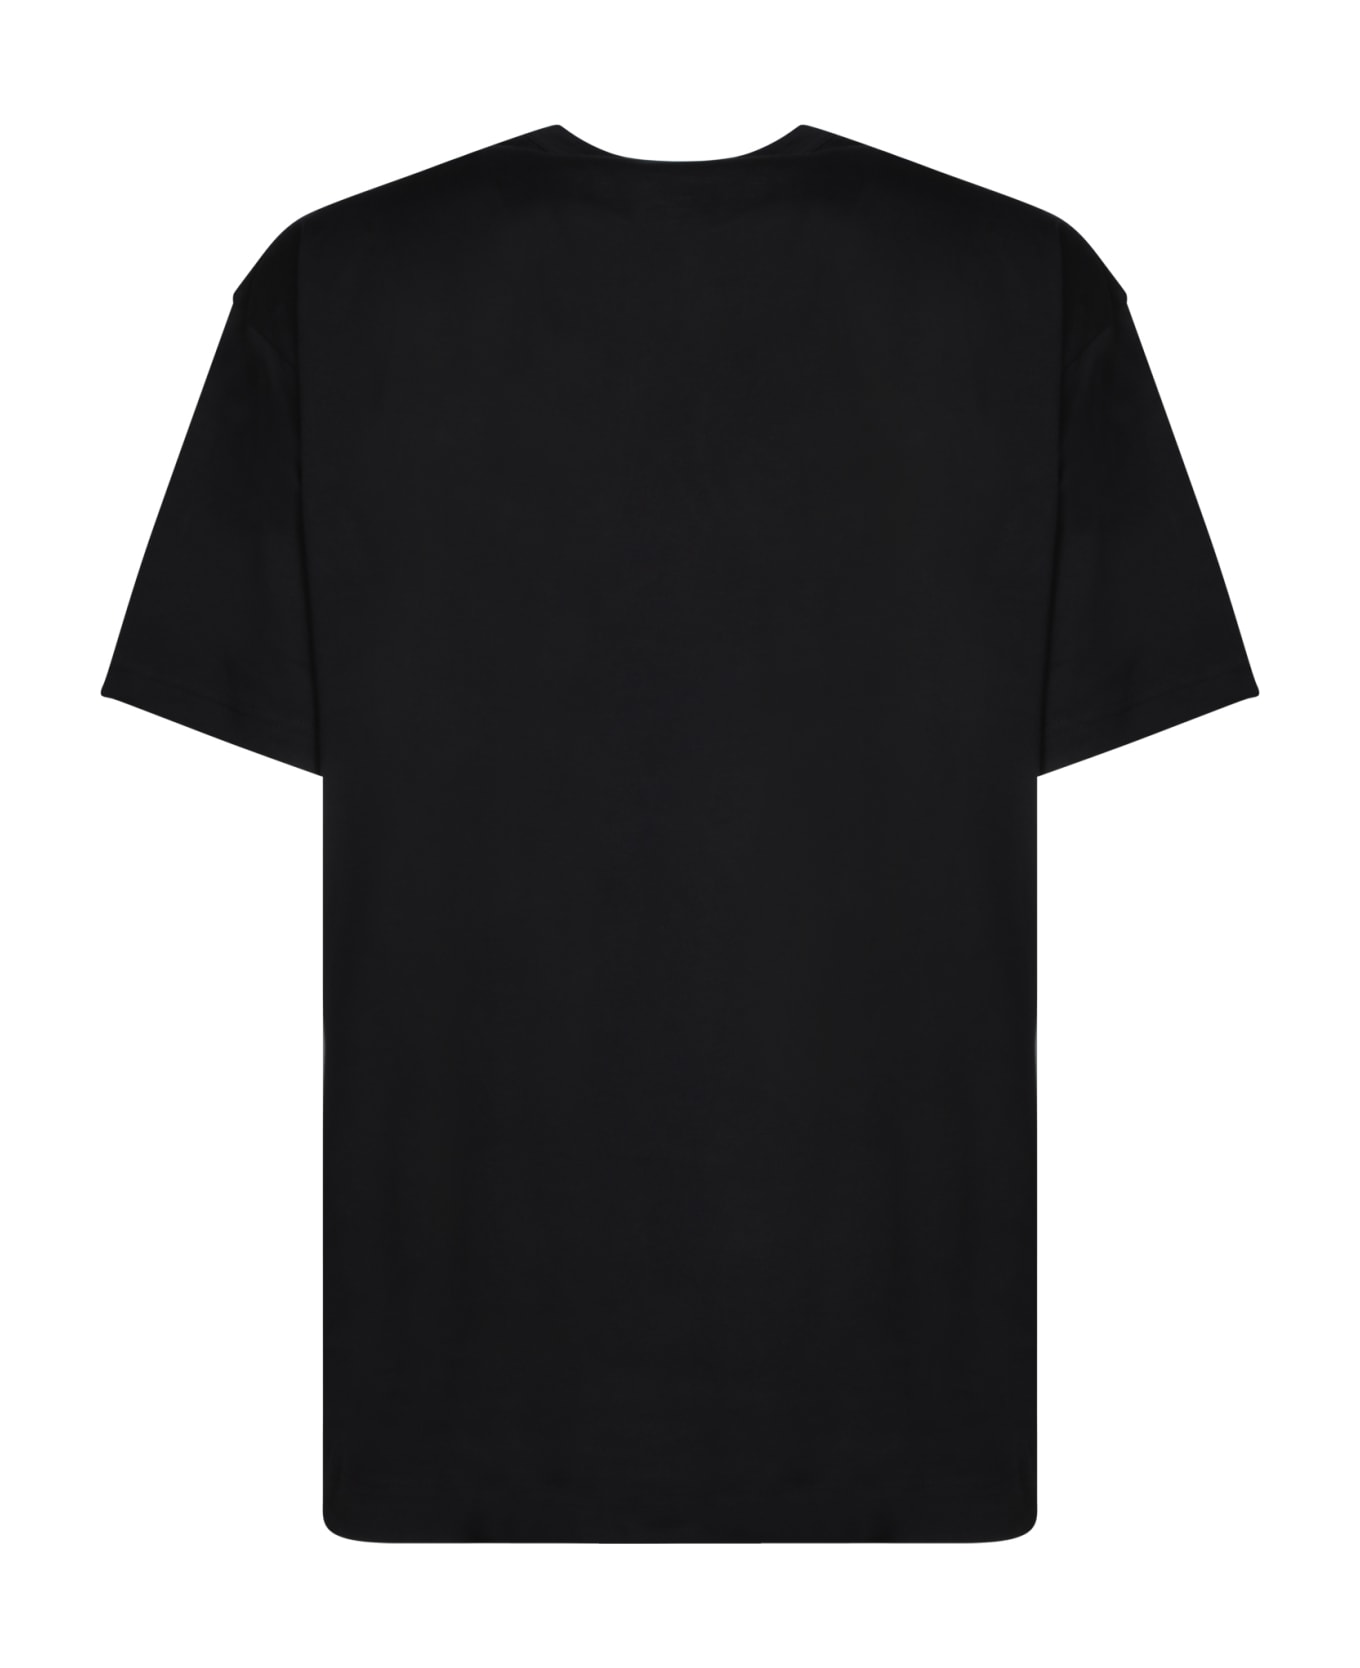 Comme des Garçons Shirt Oversize Black T-shirt - Black